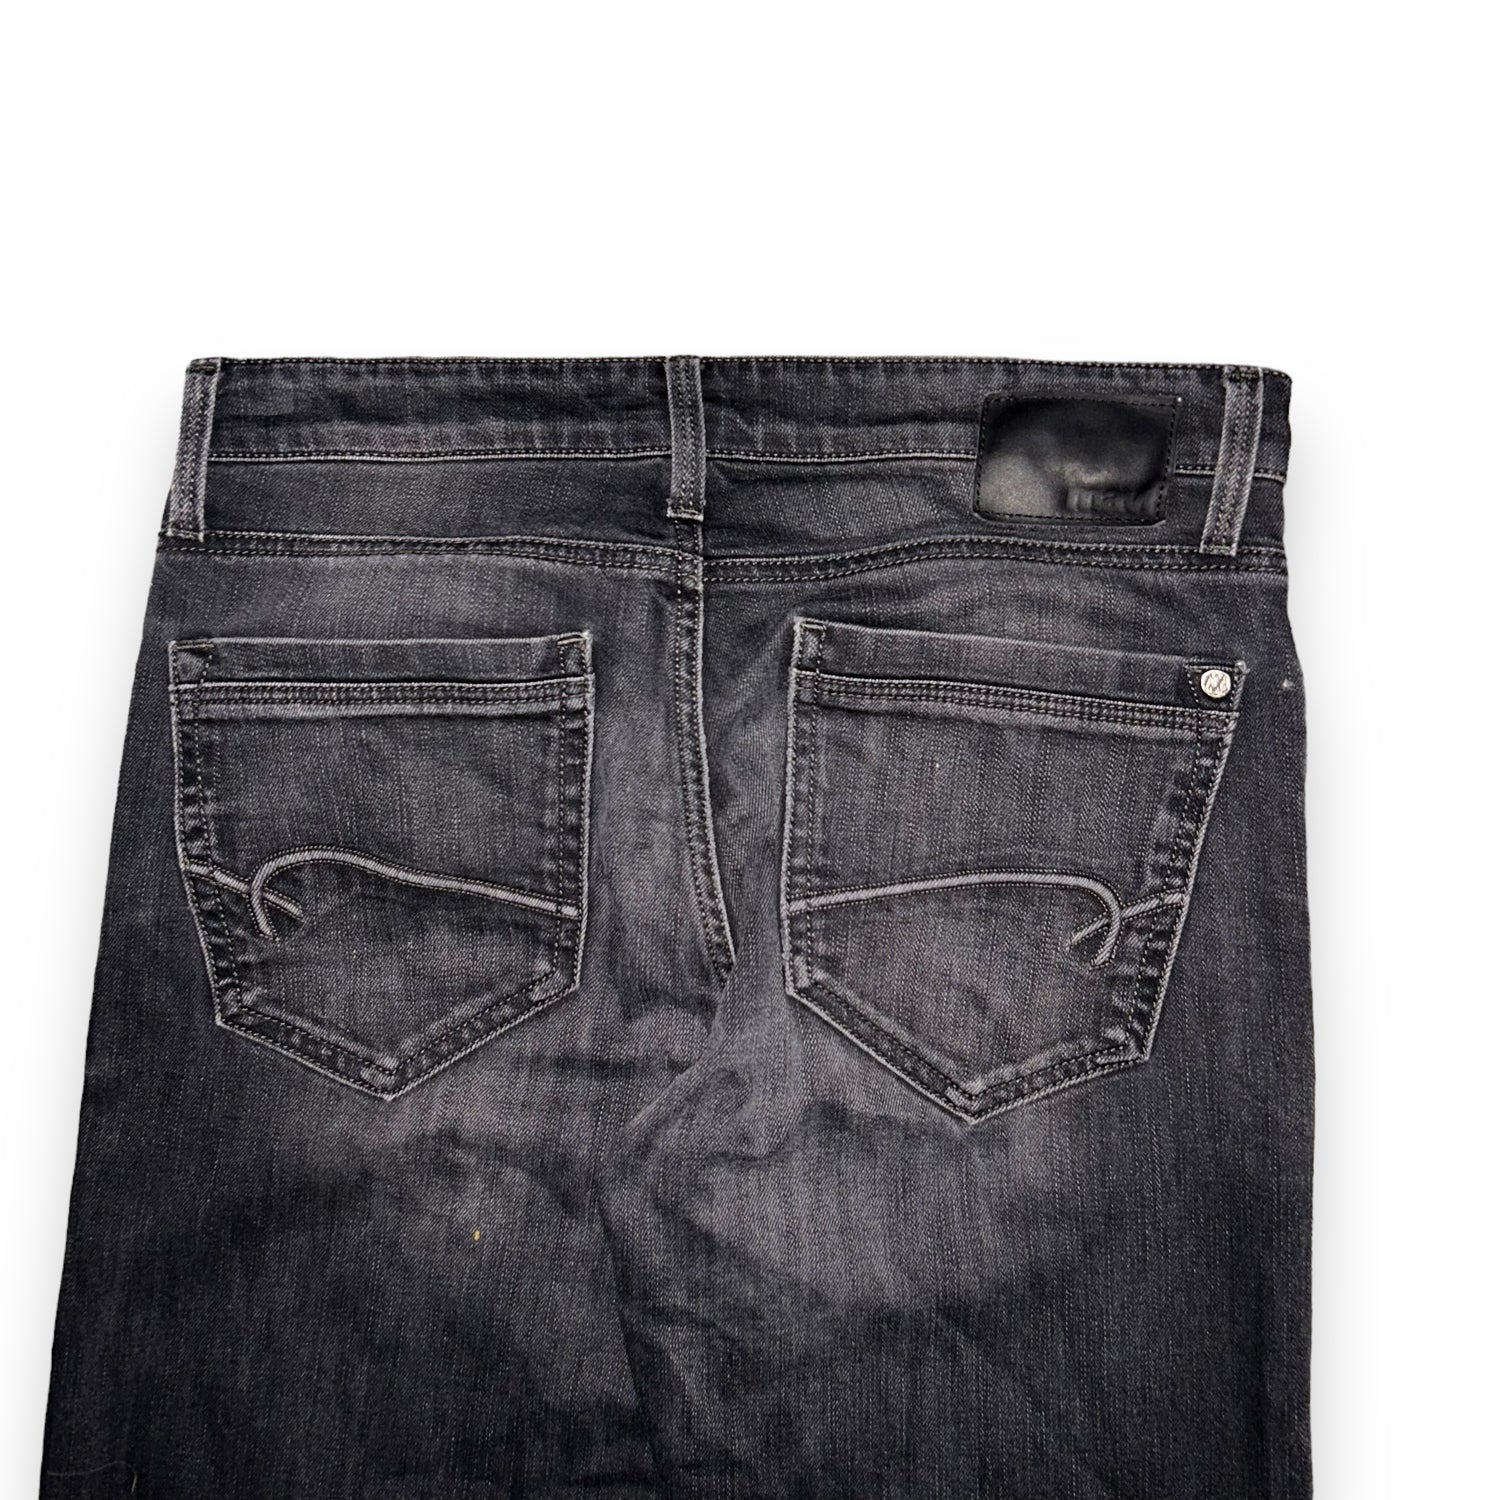 Mavi Jeans Jeans (32 USA M/L)